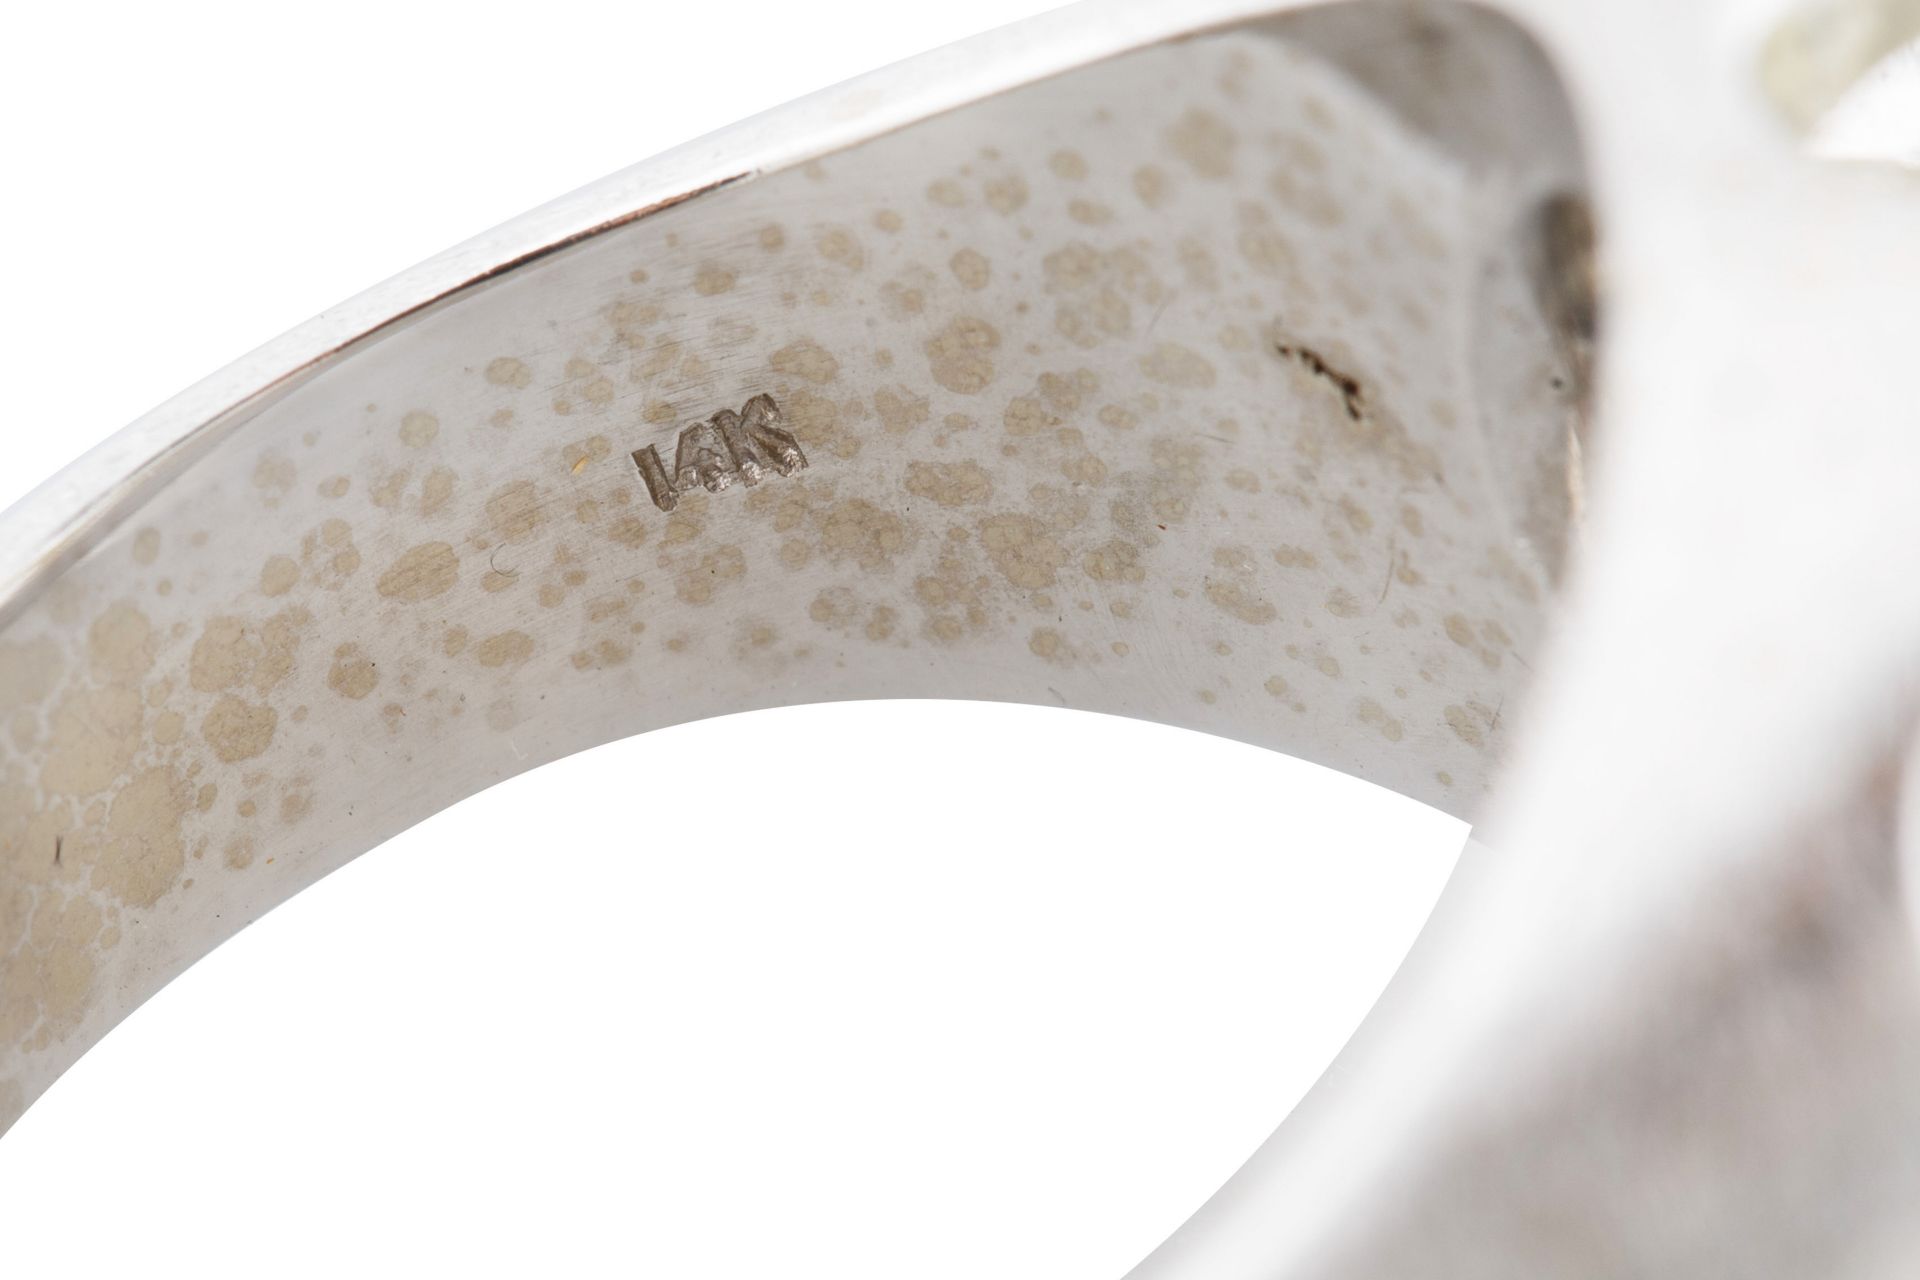 A 8.95 CT ROUND BRILLIANT CUT DIAMOND RING - Image 4 of 6